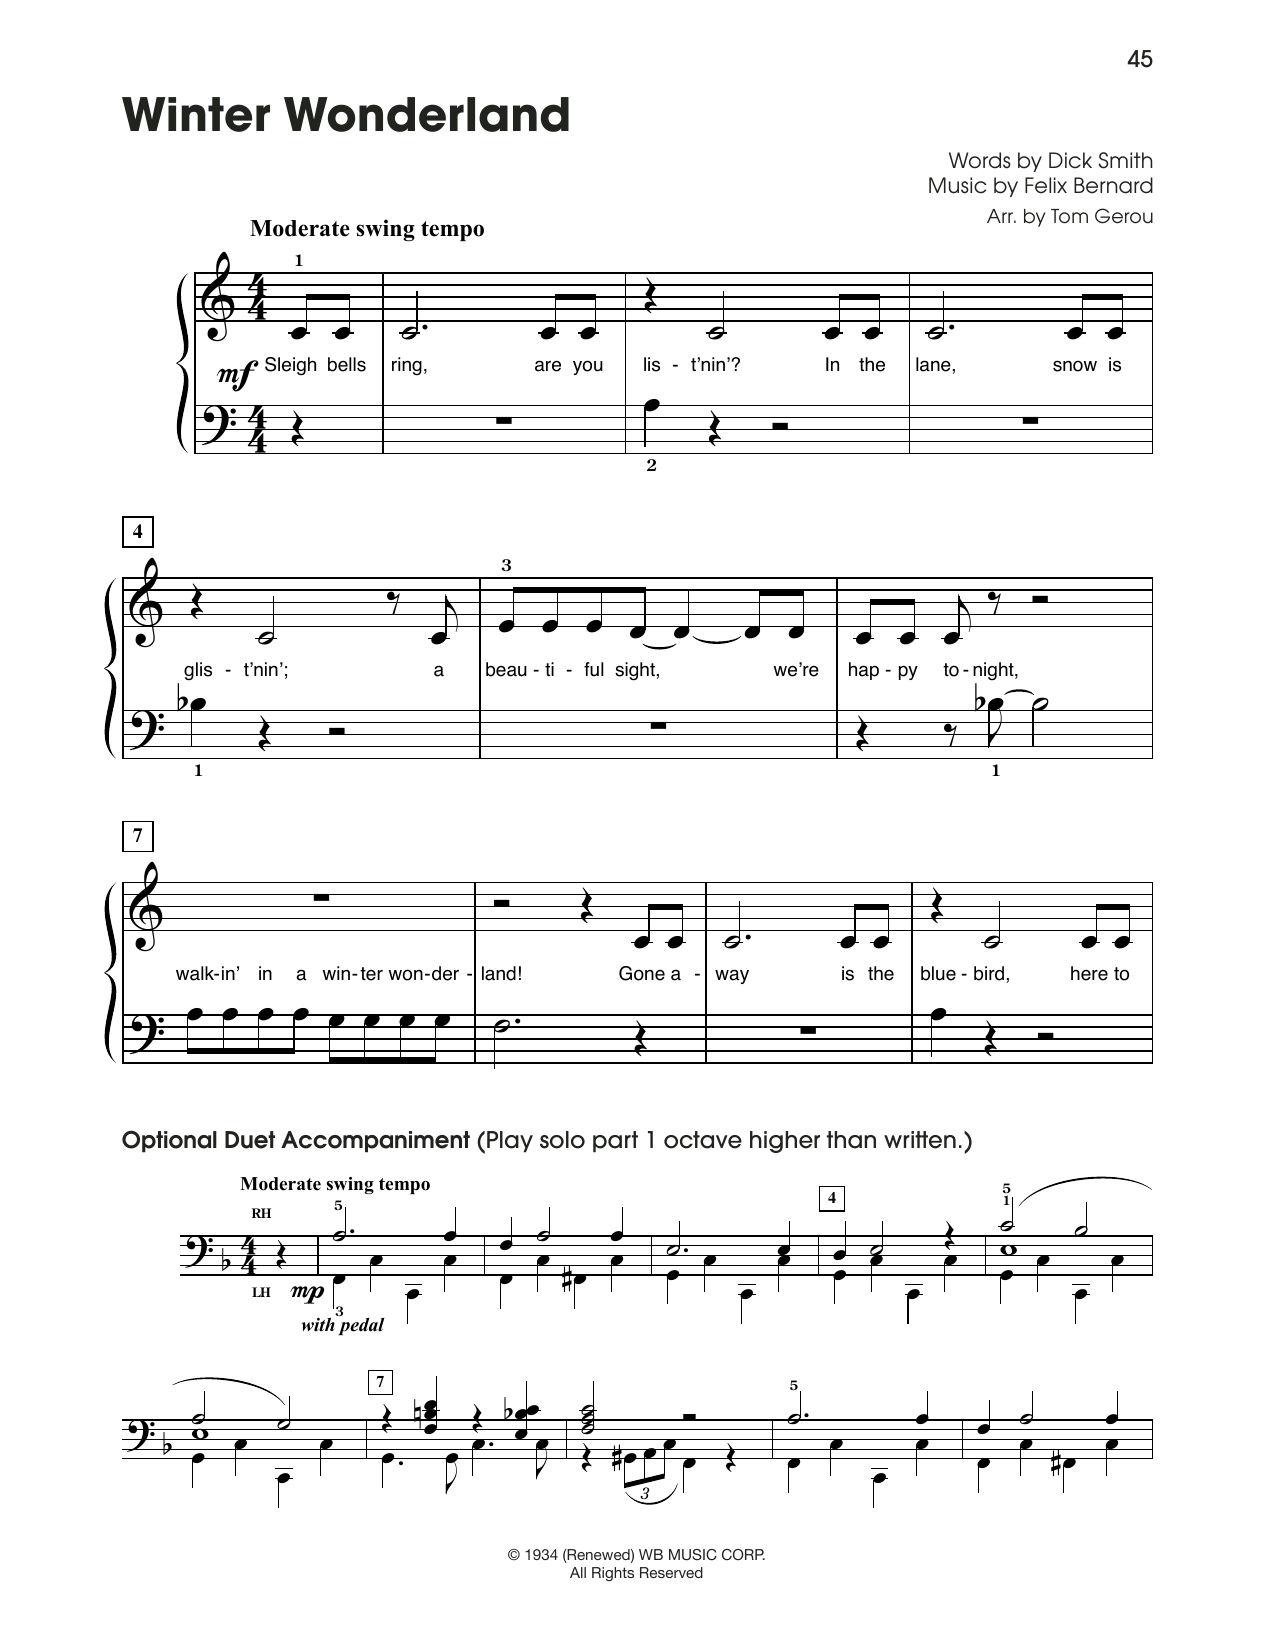 Download Felix Bernard Winter Wonderland (arr. Tom Gerou) Sheet Music and learn how to play 5-Finger Piano PDF digital score in minutes